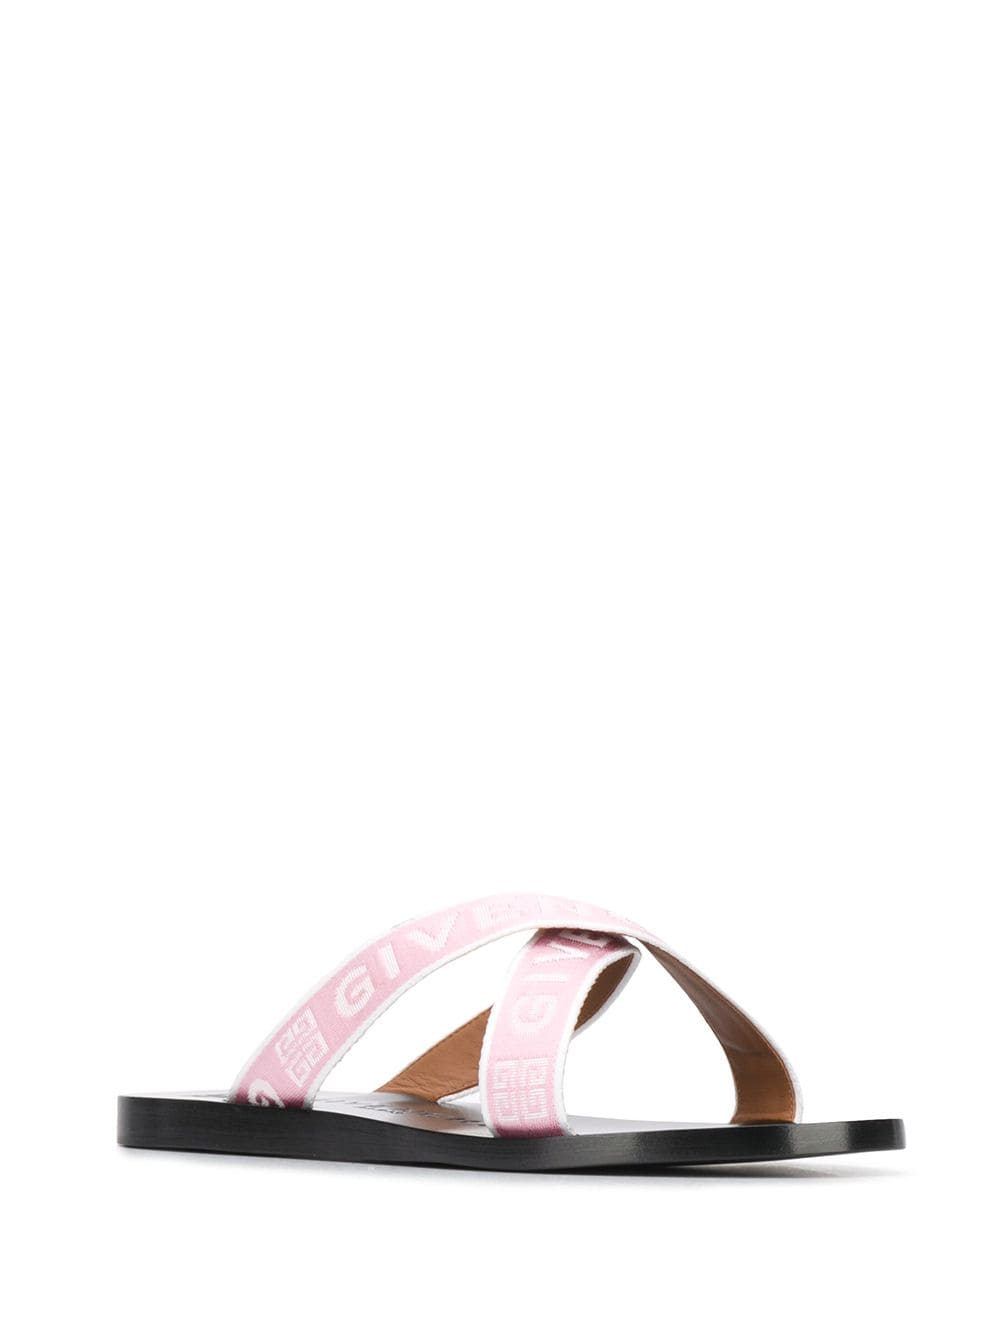 фото Givenchy сандалии с логотипом на ремешках